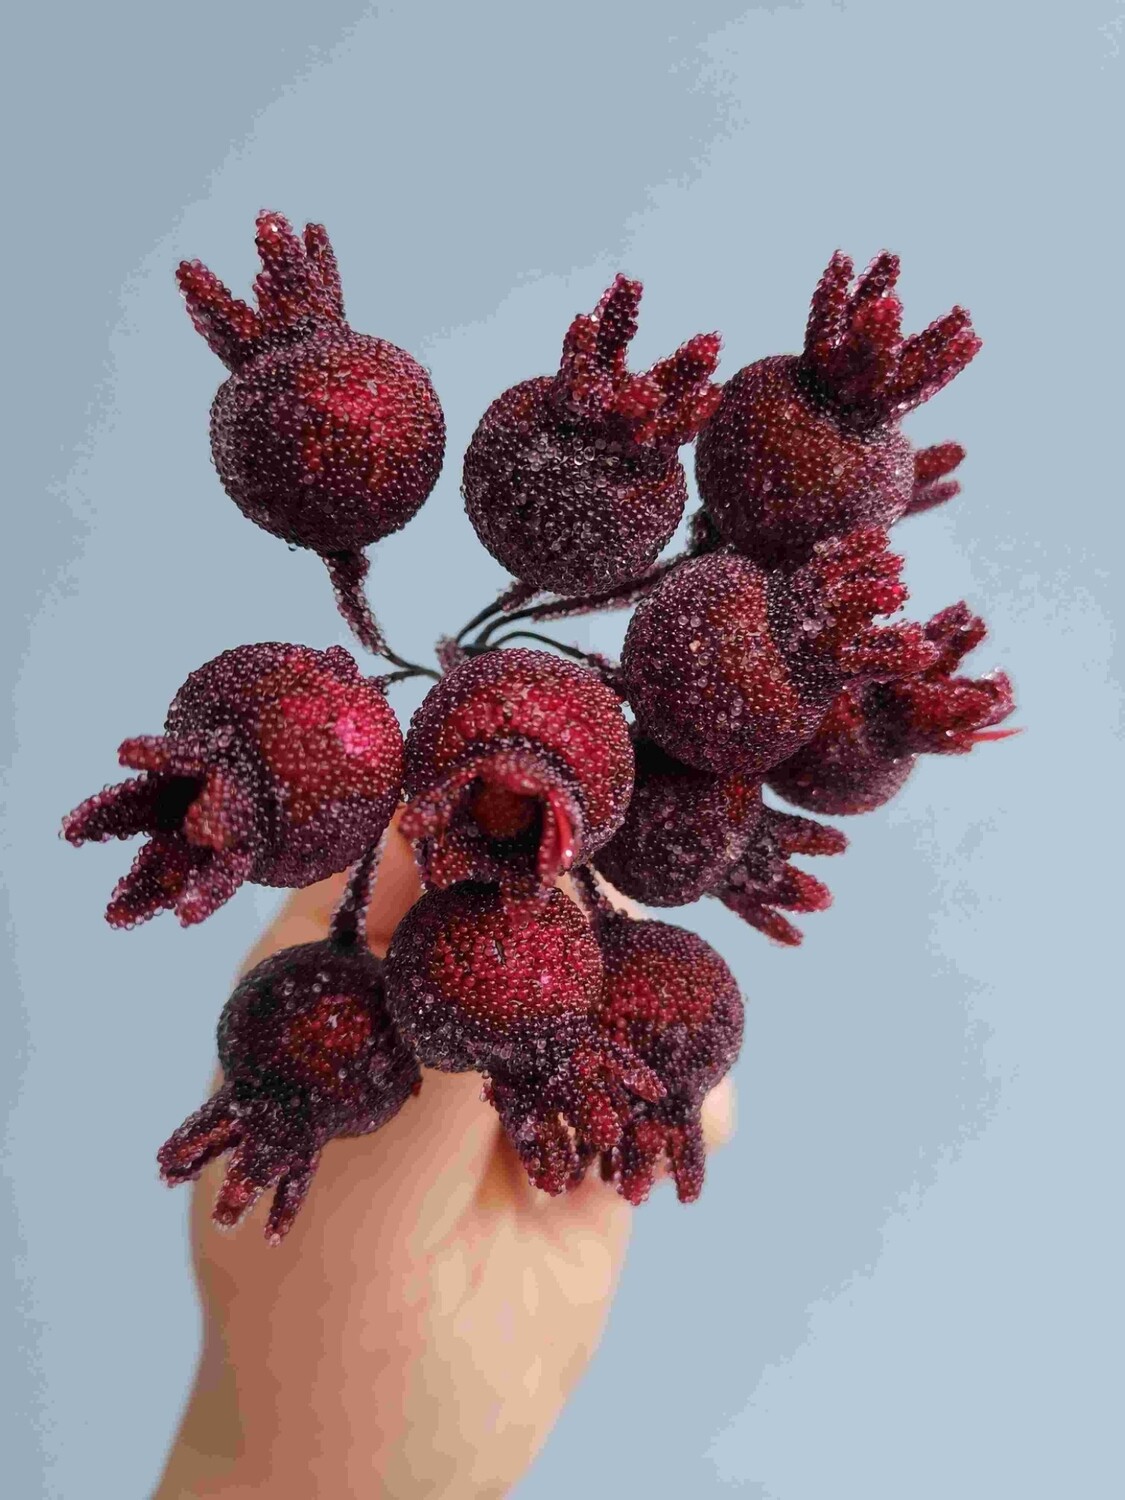 Набор ягод засахаренных на выставках 12шт красный